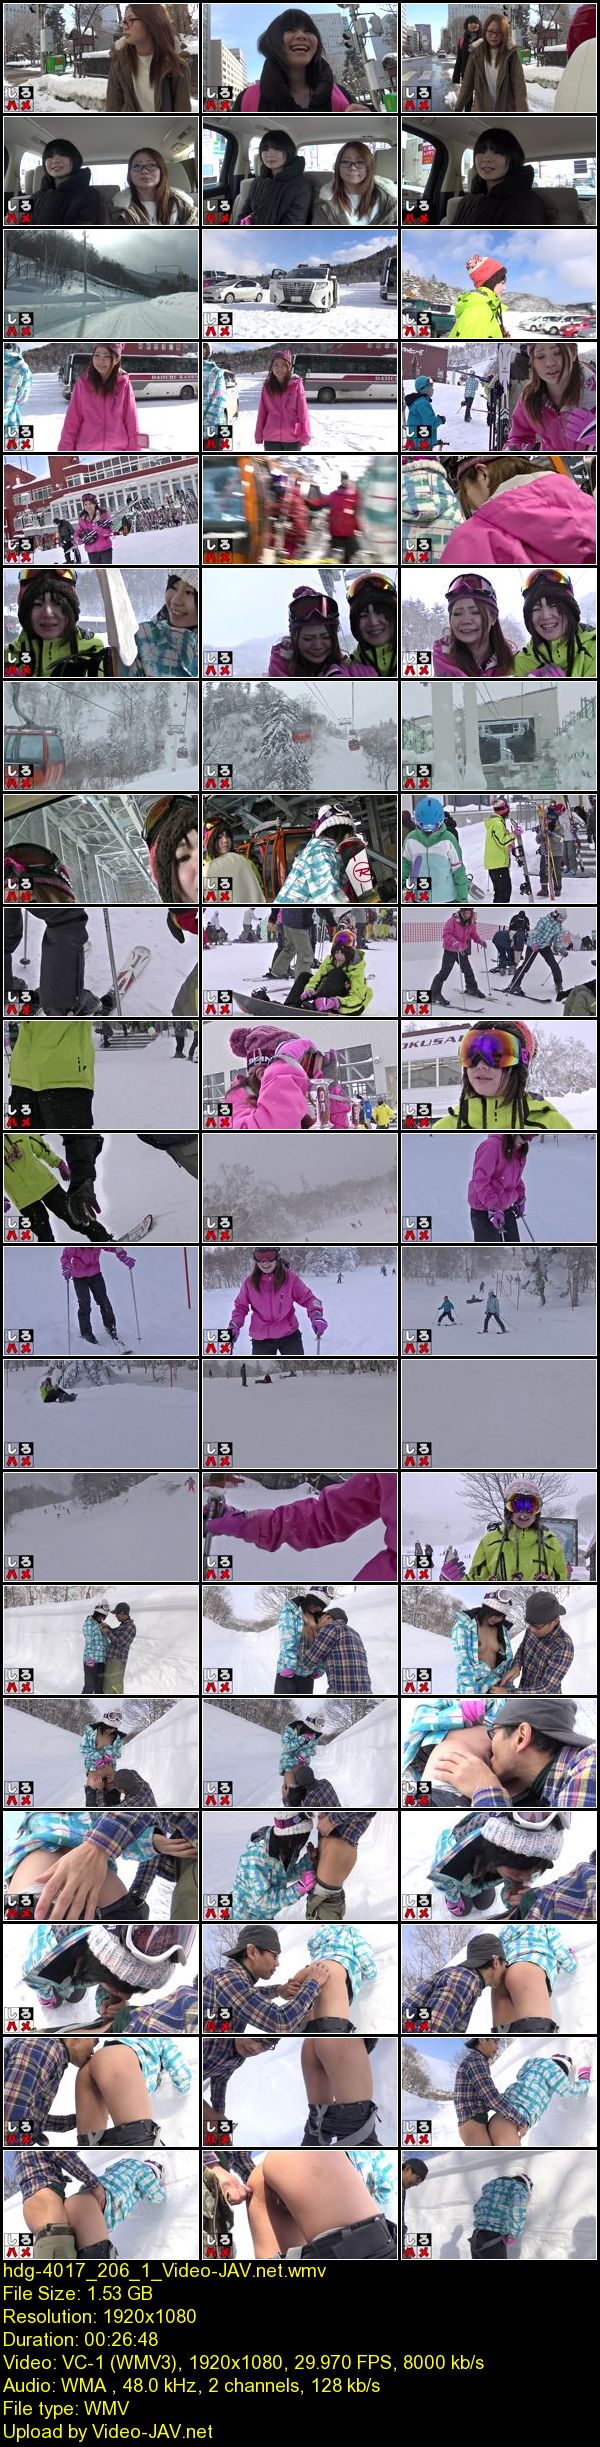 Download Japanese Adult Video Heydouga / しろハメ 4017 206 【平均年齢19.3才】私をスキーに連れてって♪究極のドエロ・ロリ娘達と行くバコバコ中出しスキー Outdoors 野外 2016 02 15